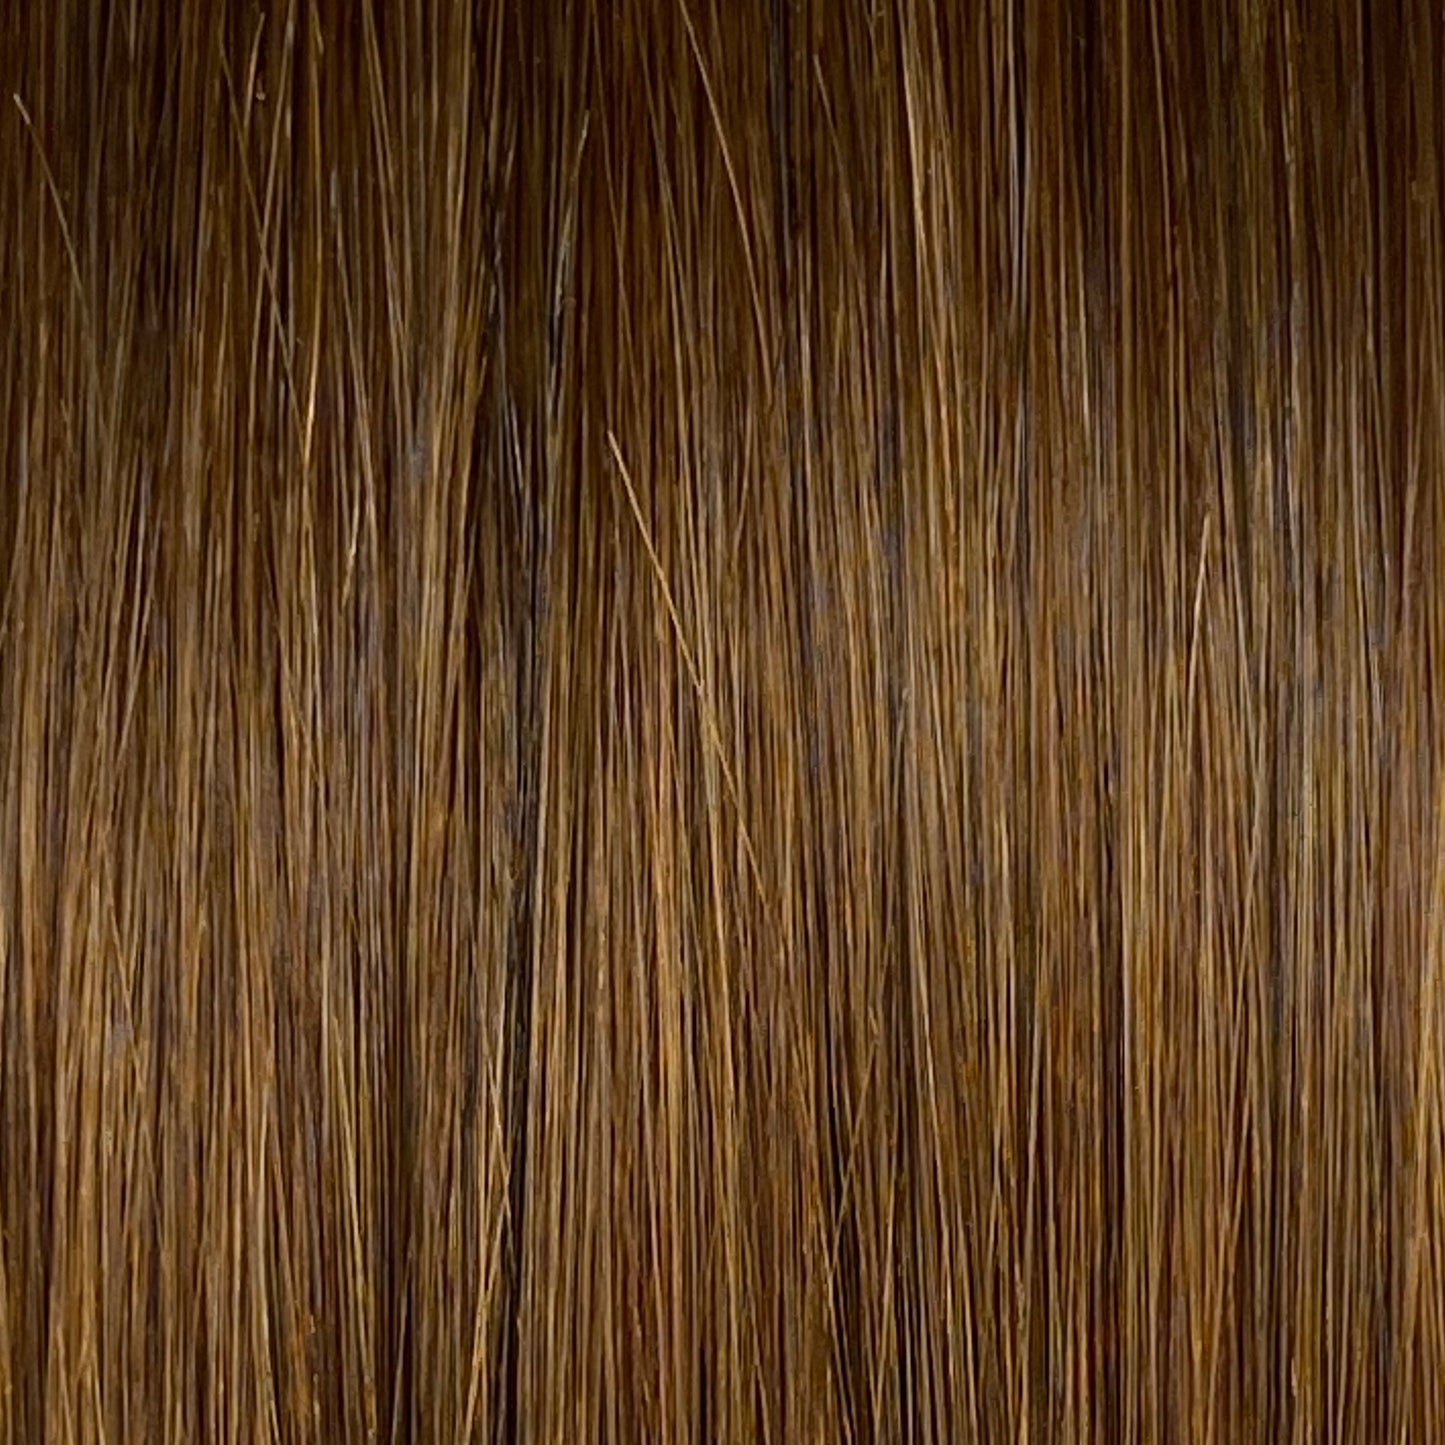 Fusion hair extensions #8 - 50cm/20 inches - Dark Blonde Fusion Euro So Cap 